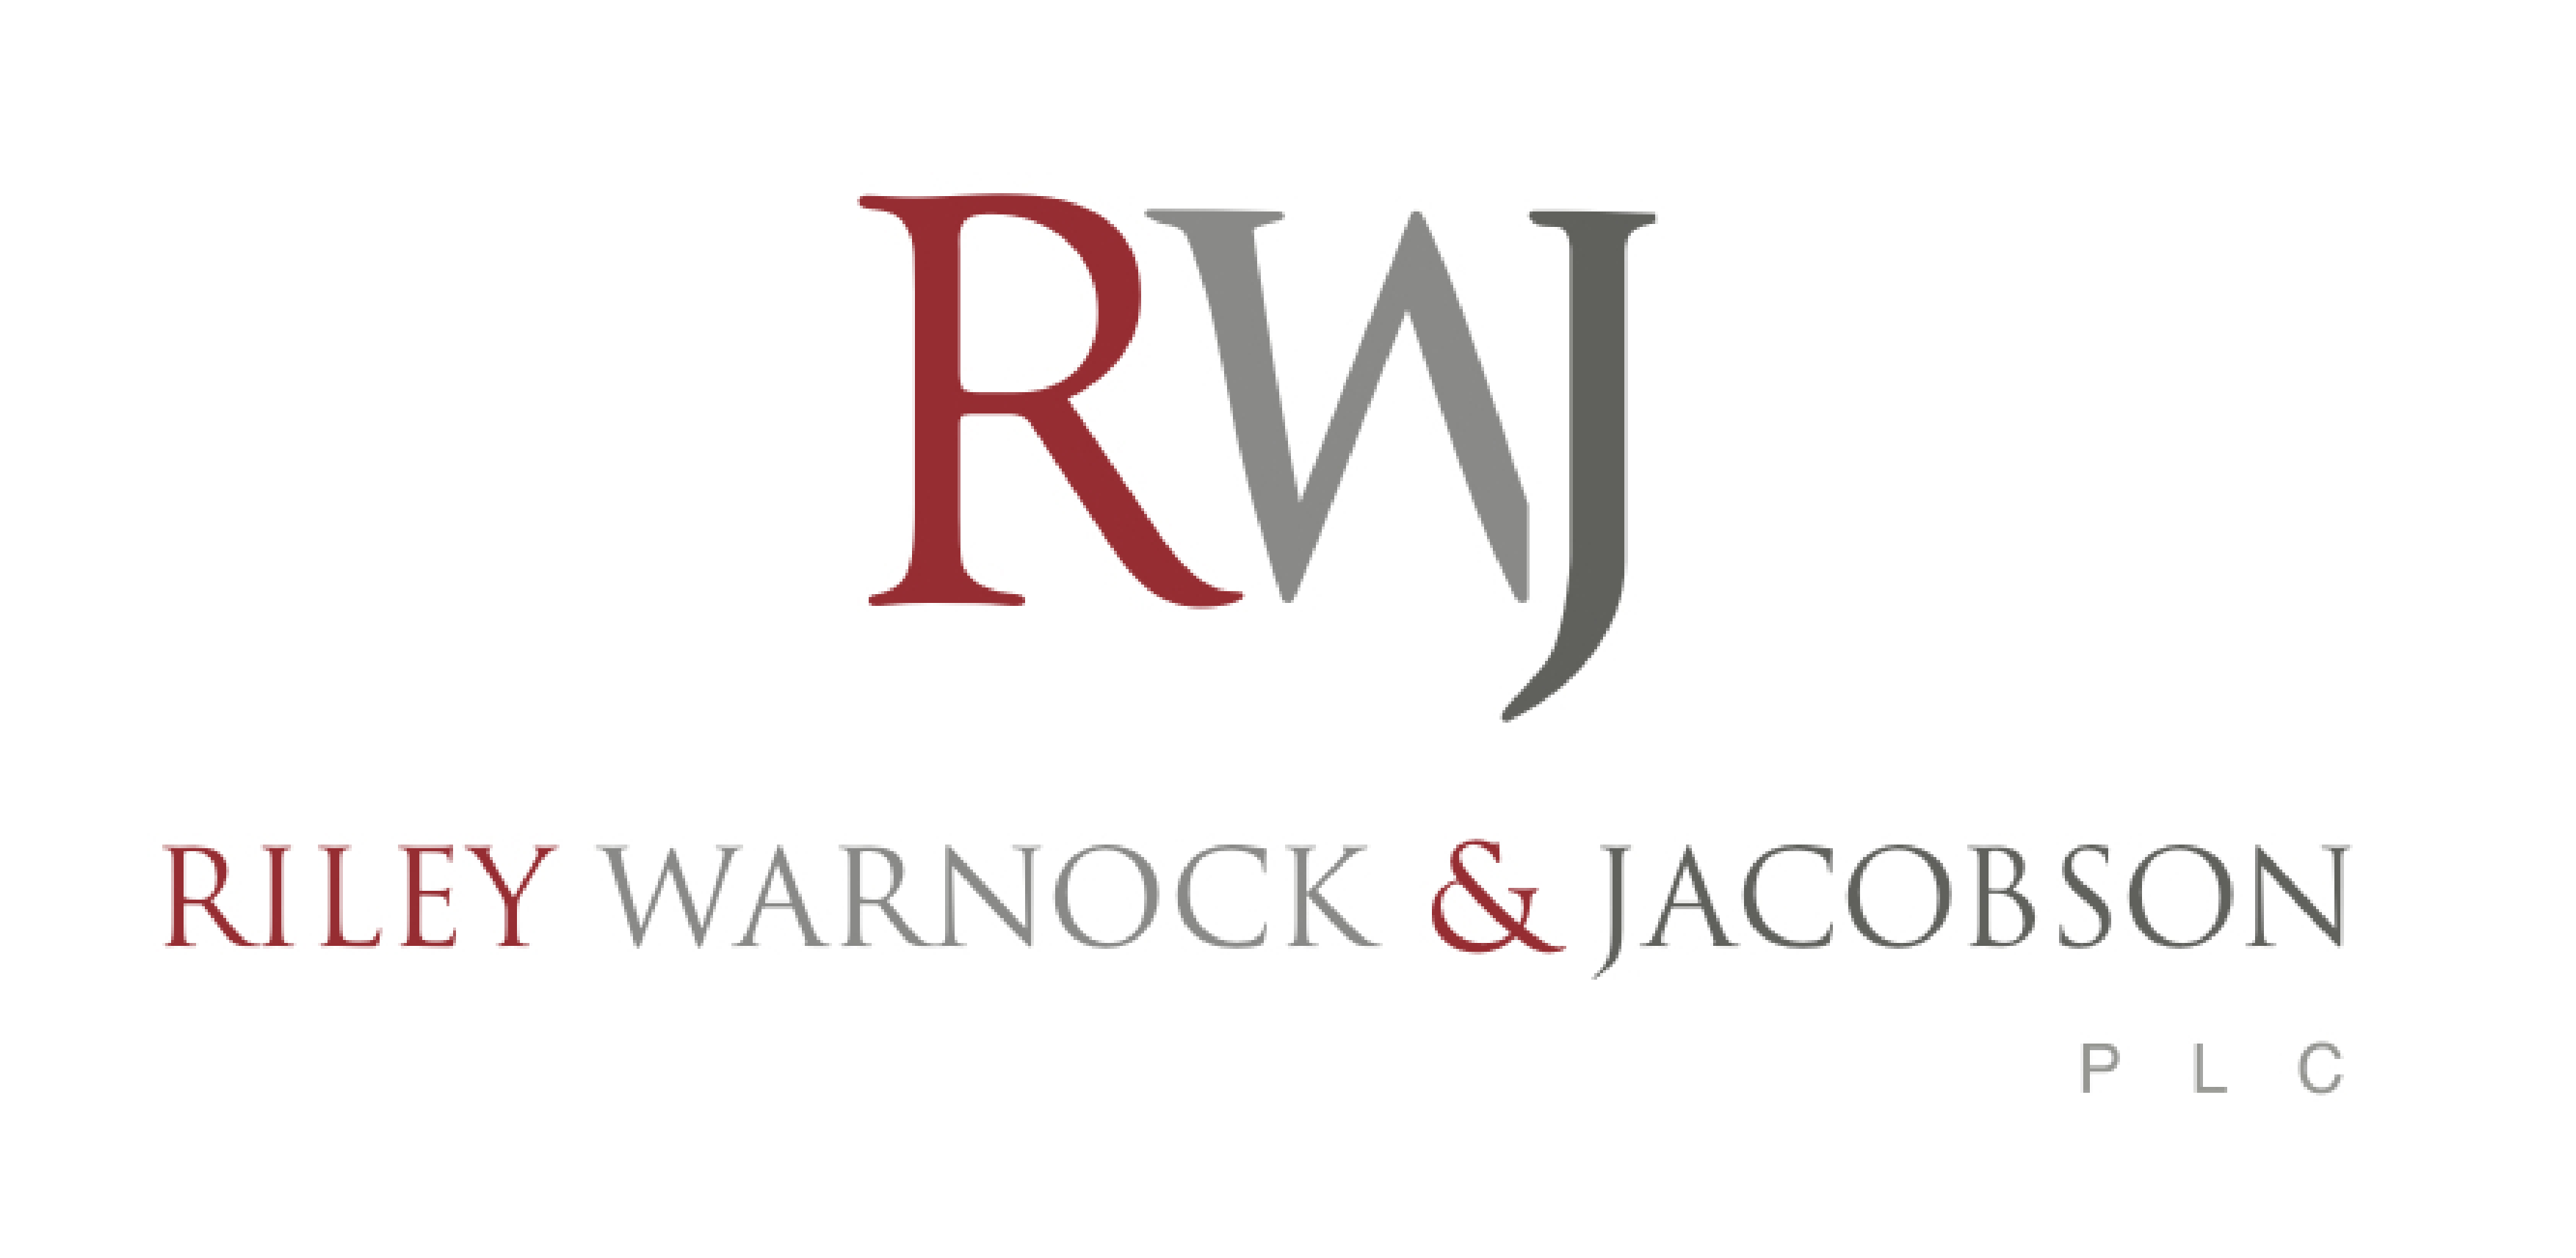 rwj-logo-png-no-background-3508-x-1713-pixesl.png